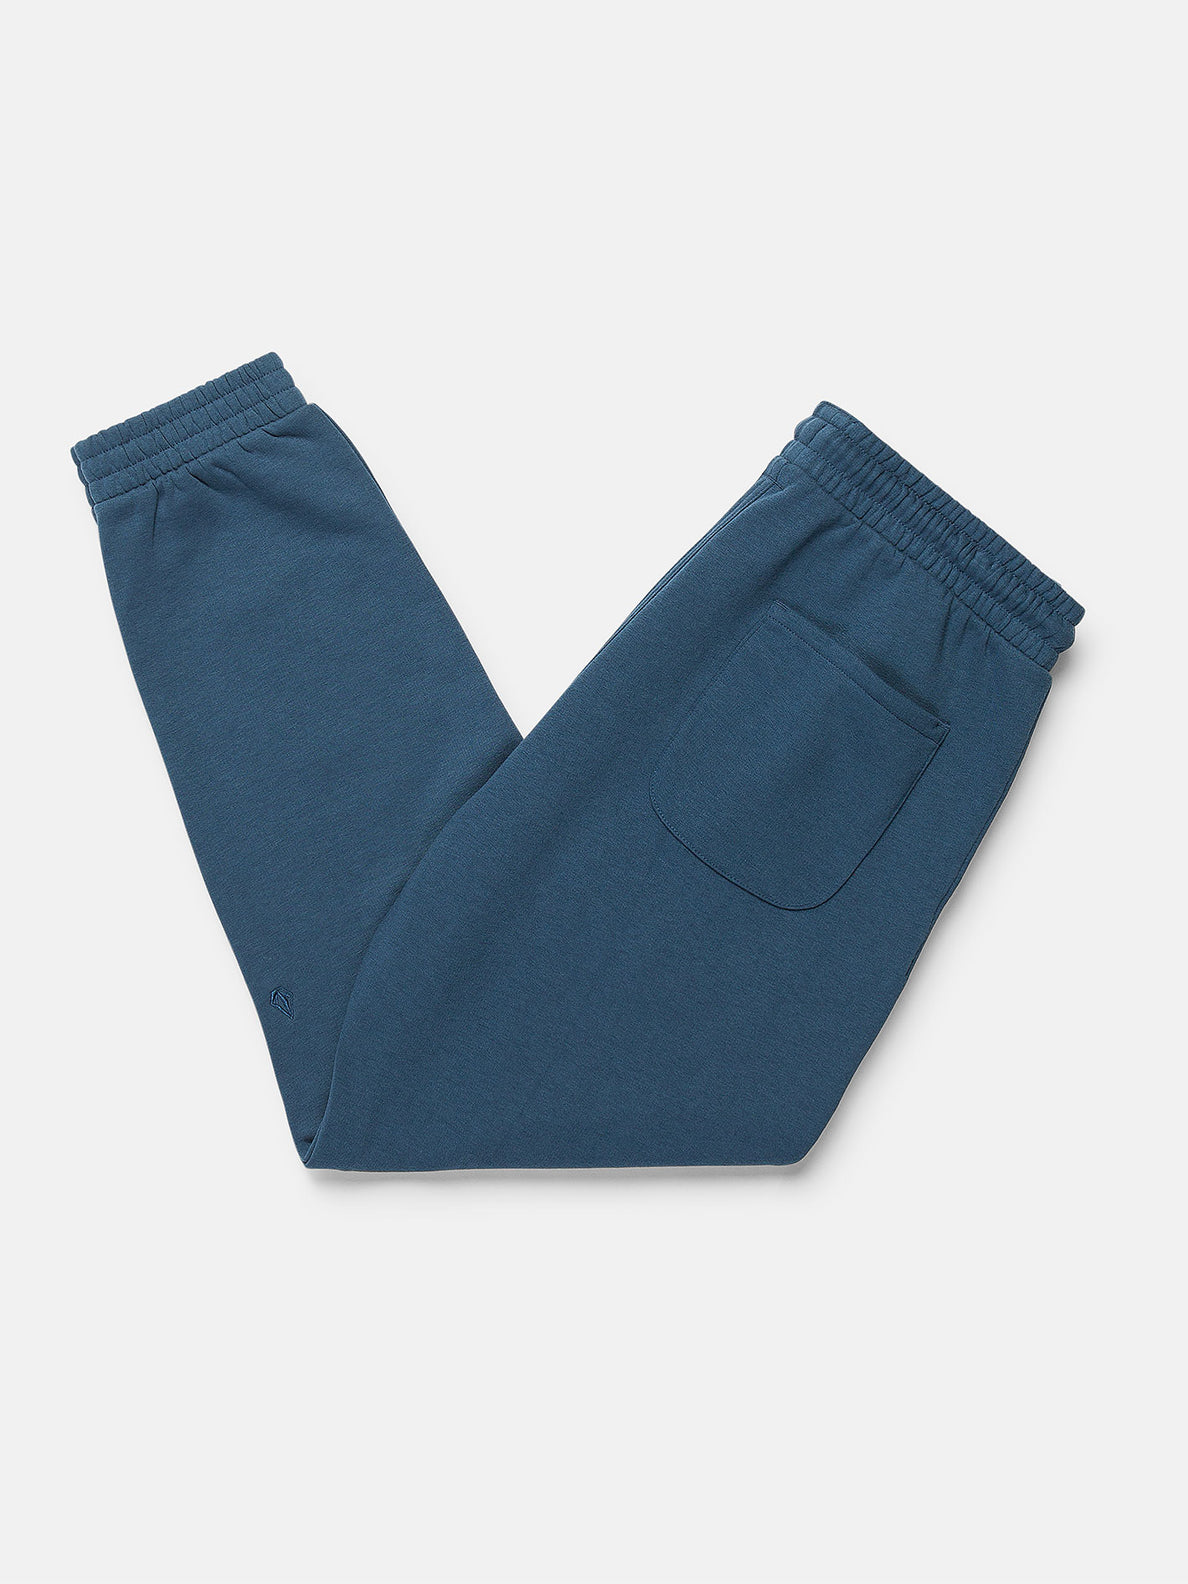 Roundabout Fleece Pants - Smokey Blue